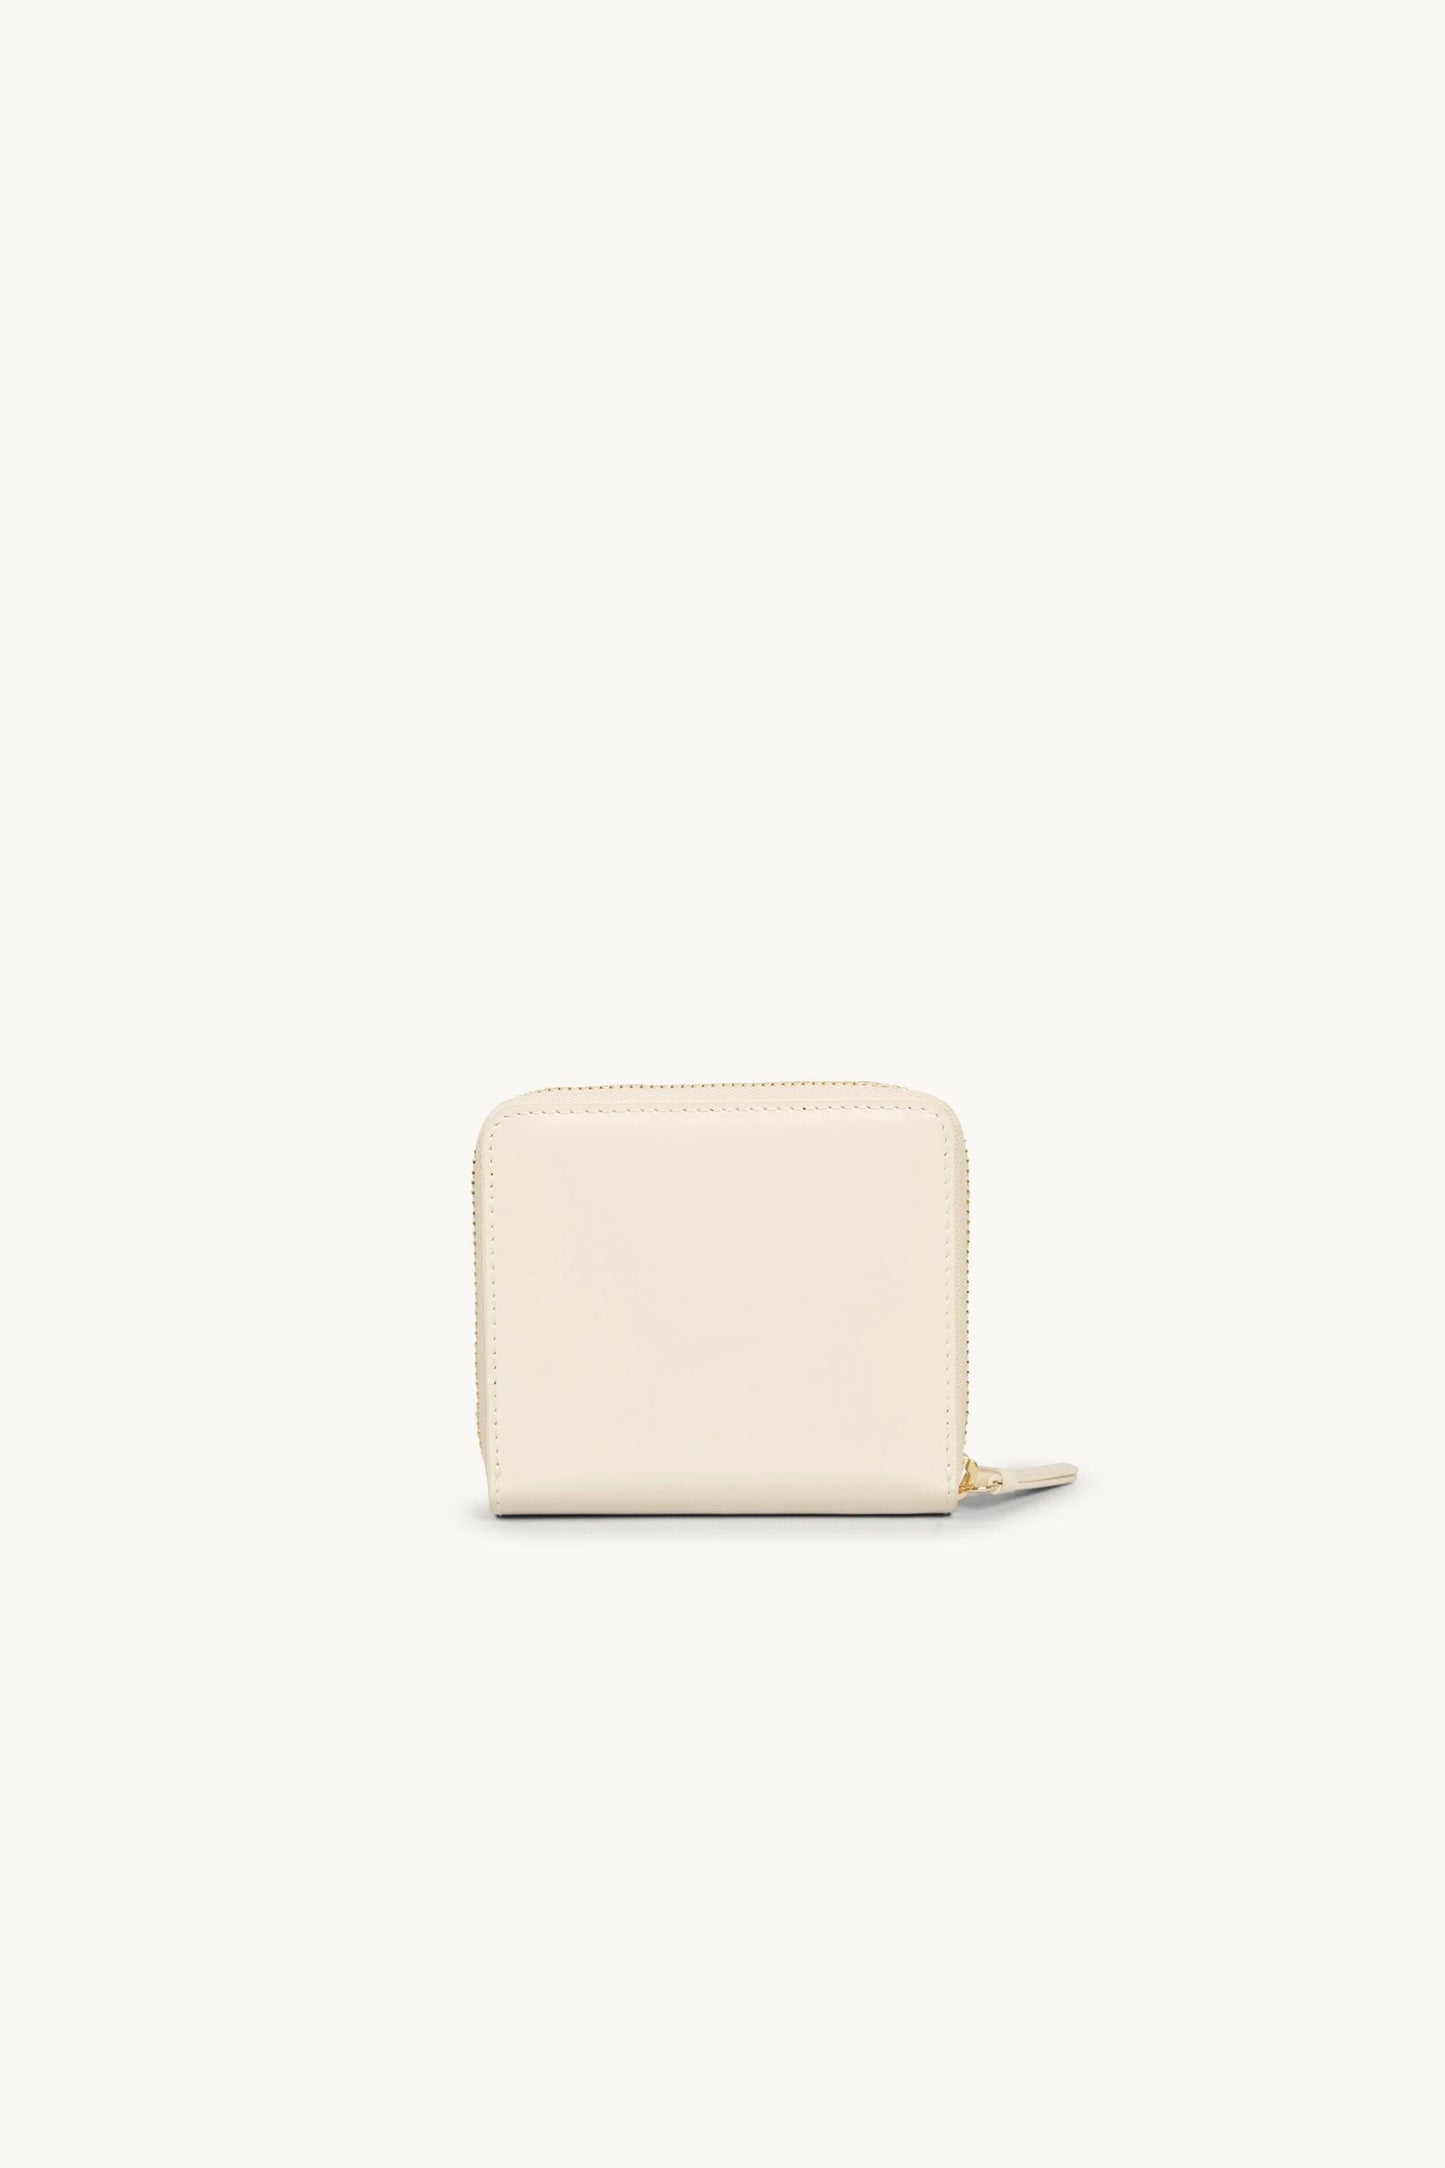 The Naomi wallet cream light gold